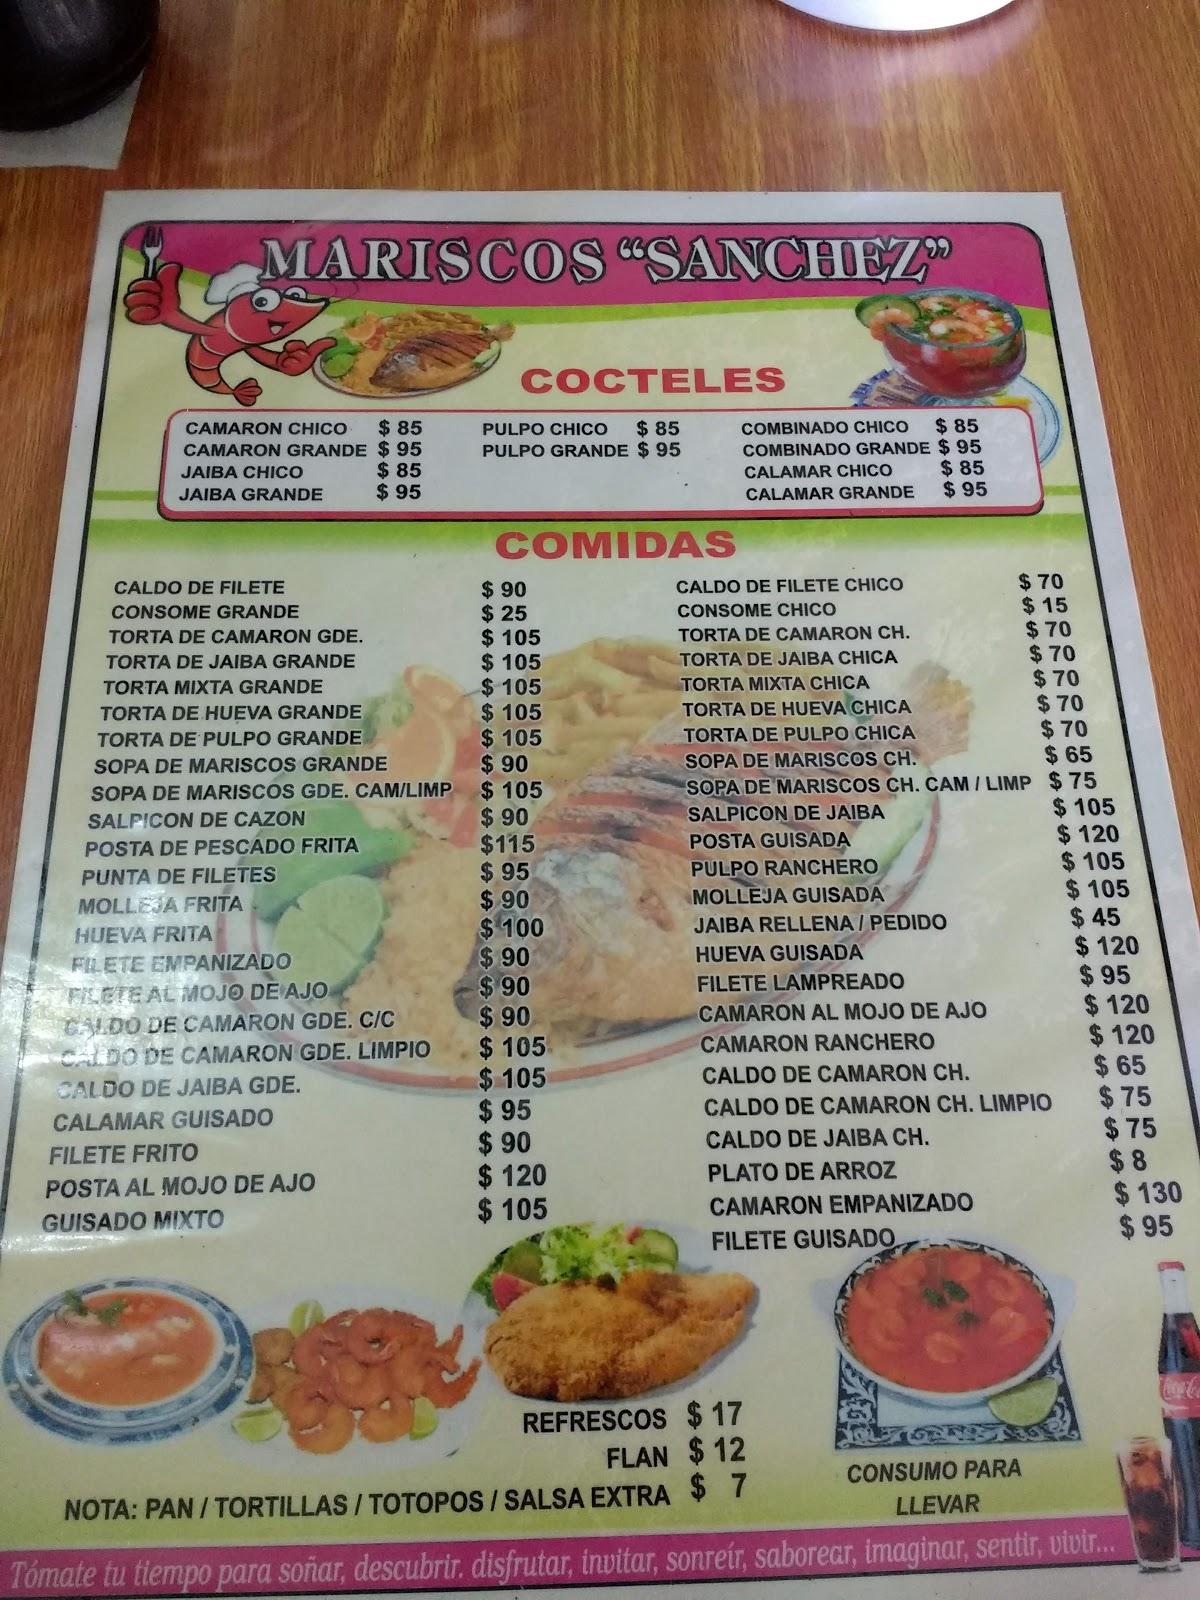 Menu at Mariscos Sánchez restaurant, Tampico